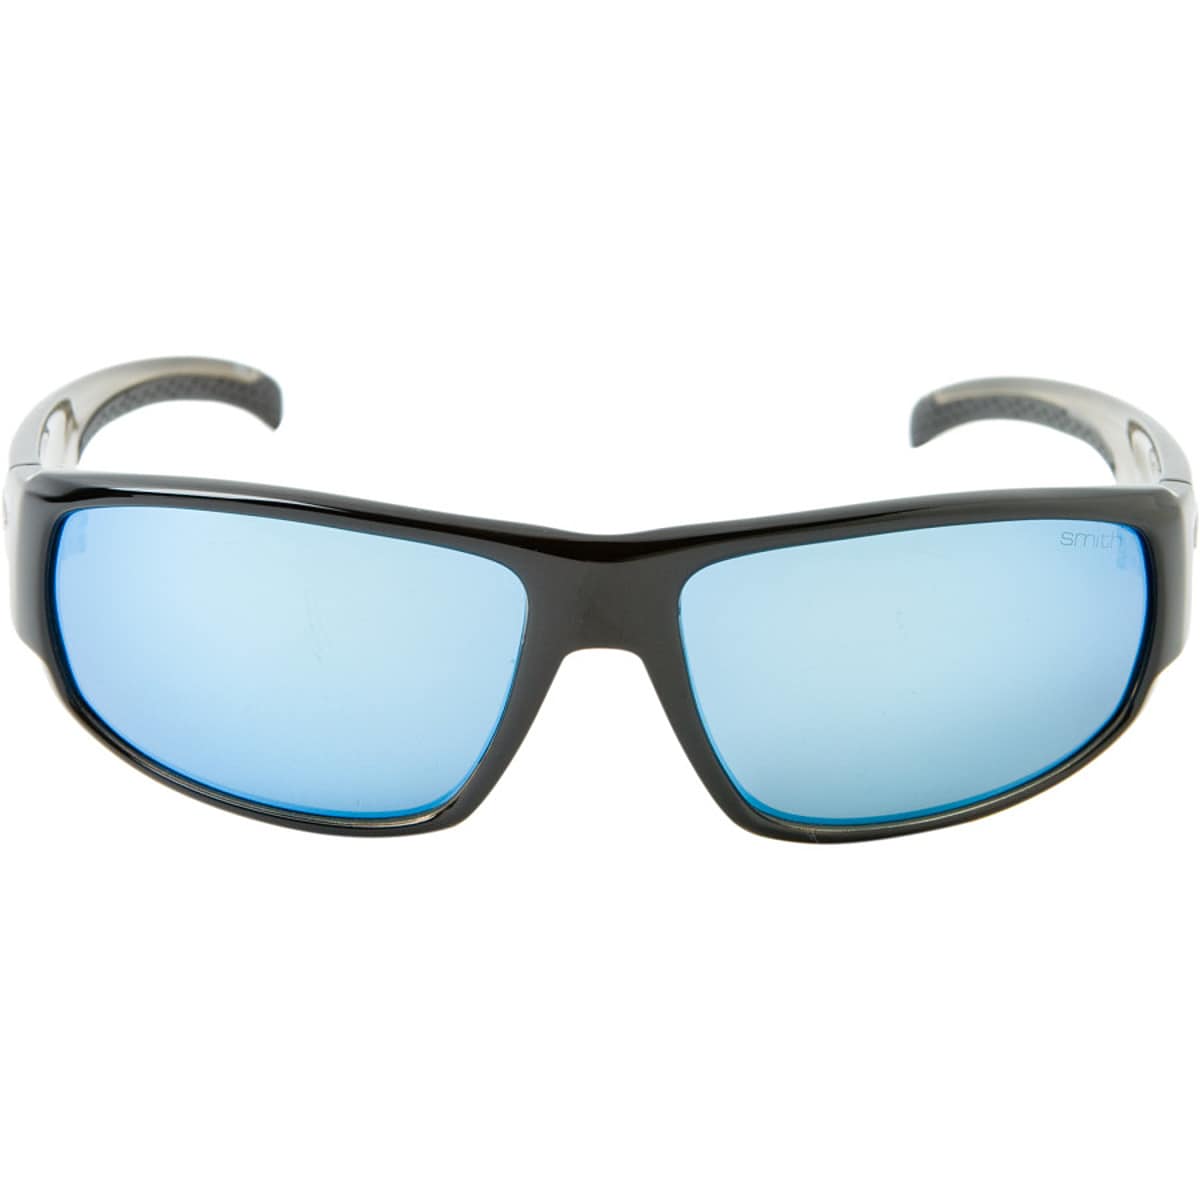 Smith Tenet Polarized Sunglasses | Peter Glenn